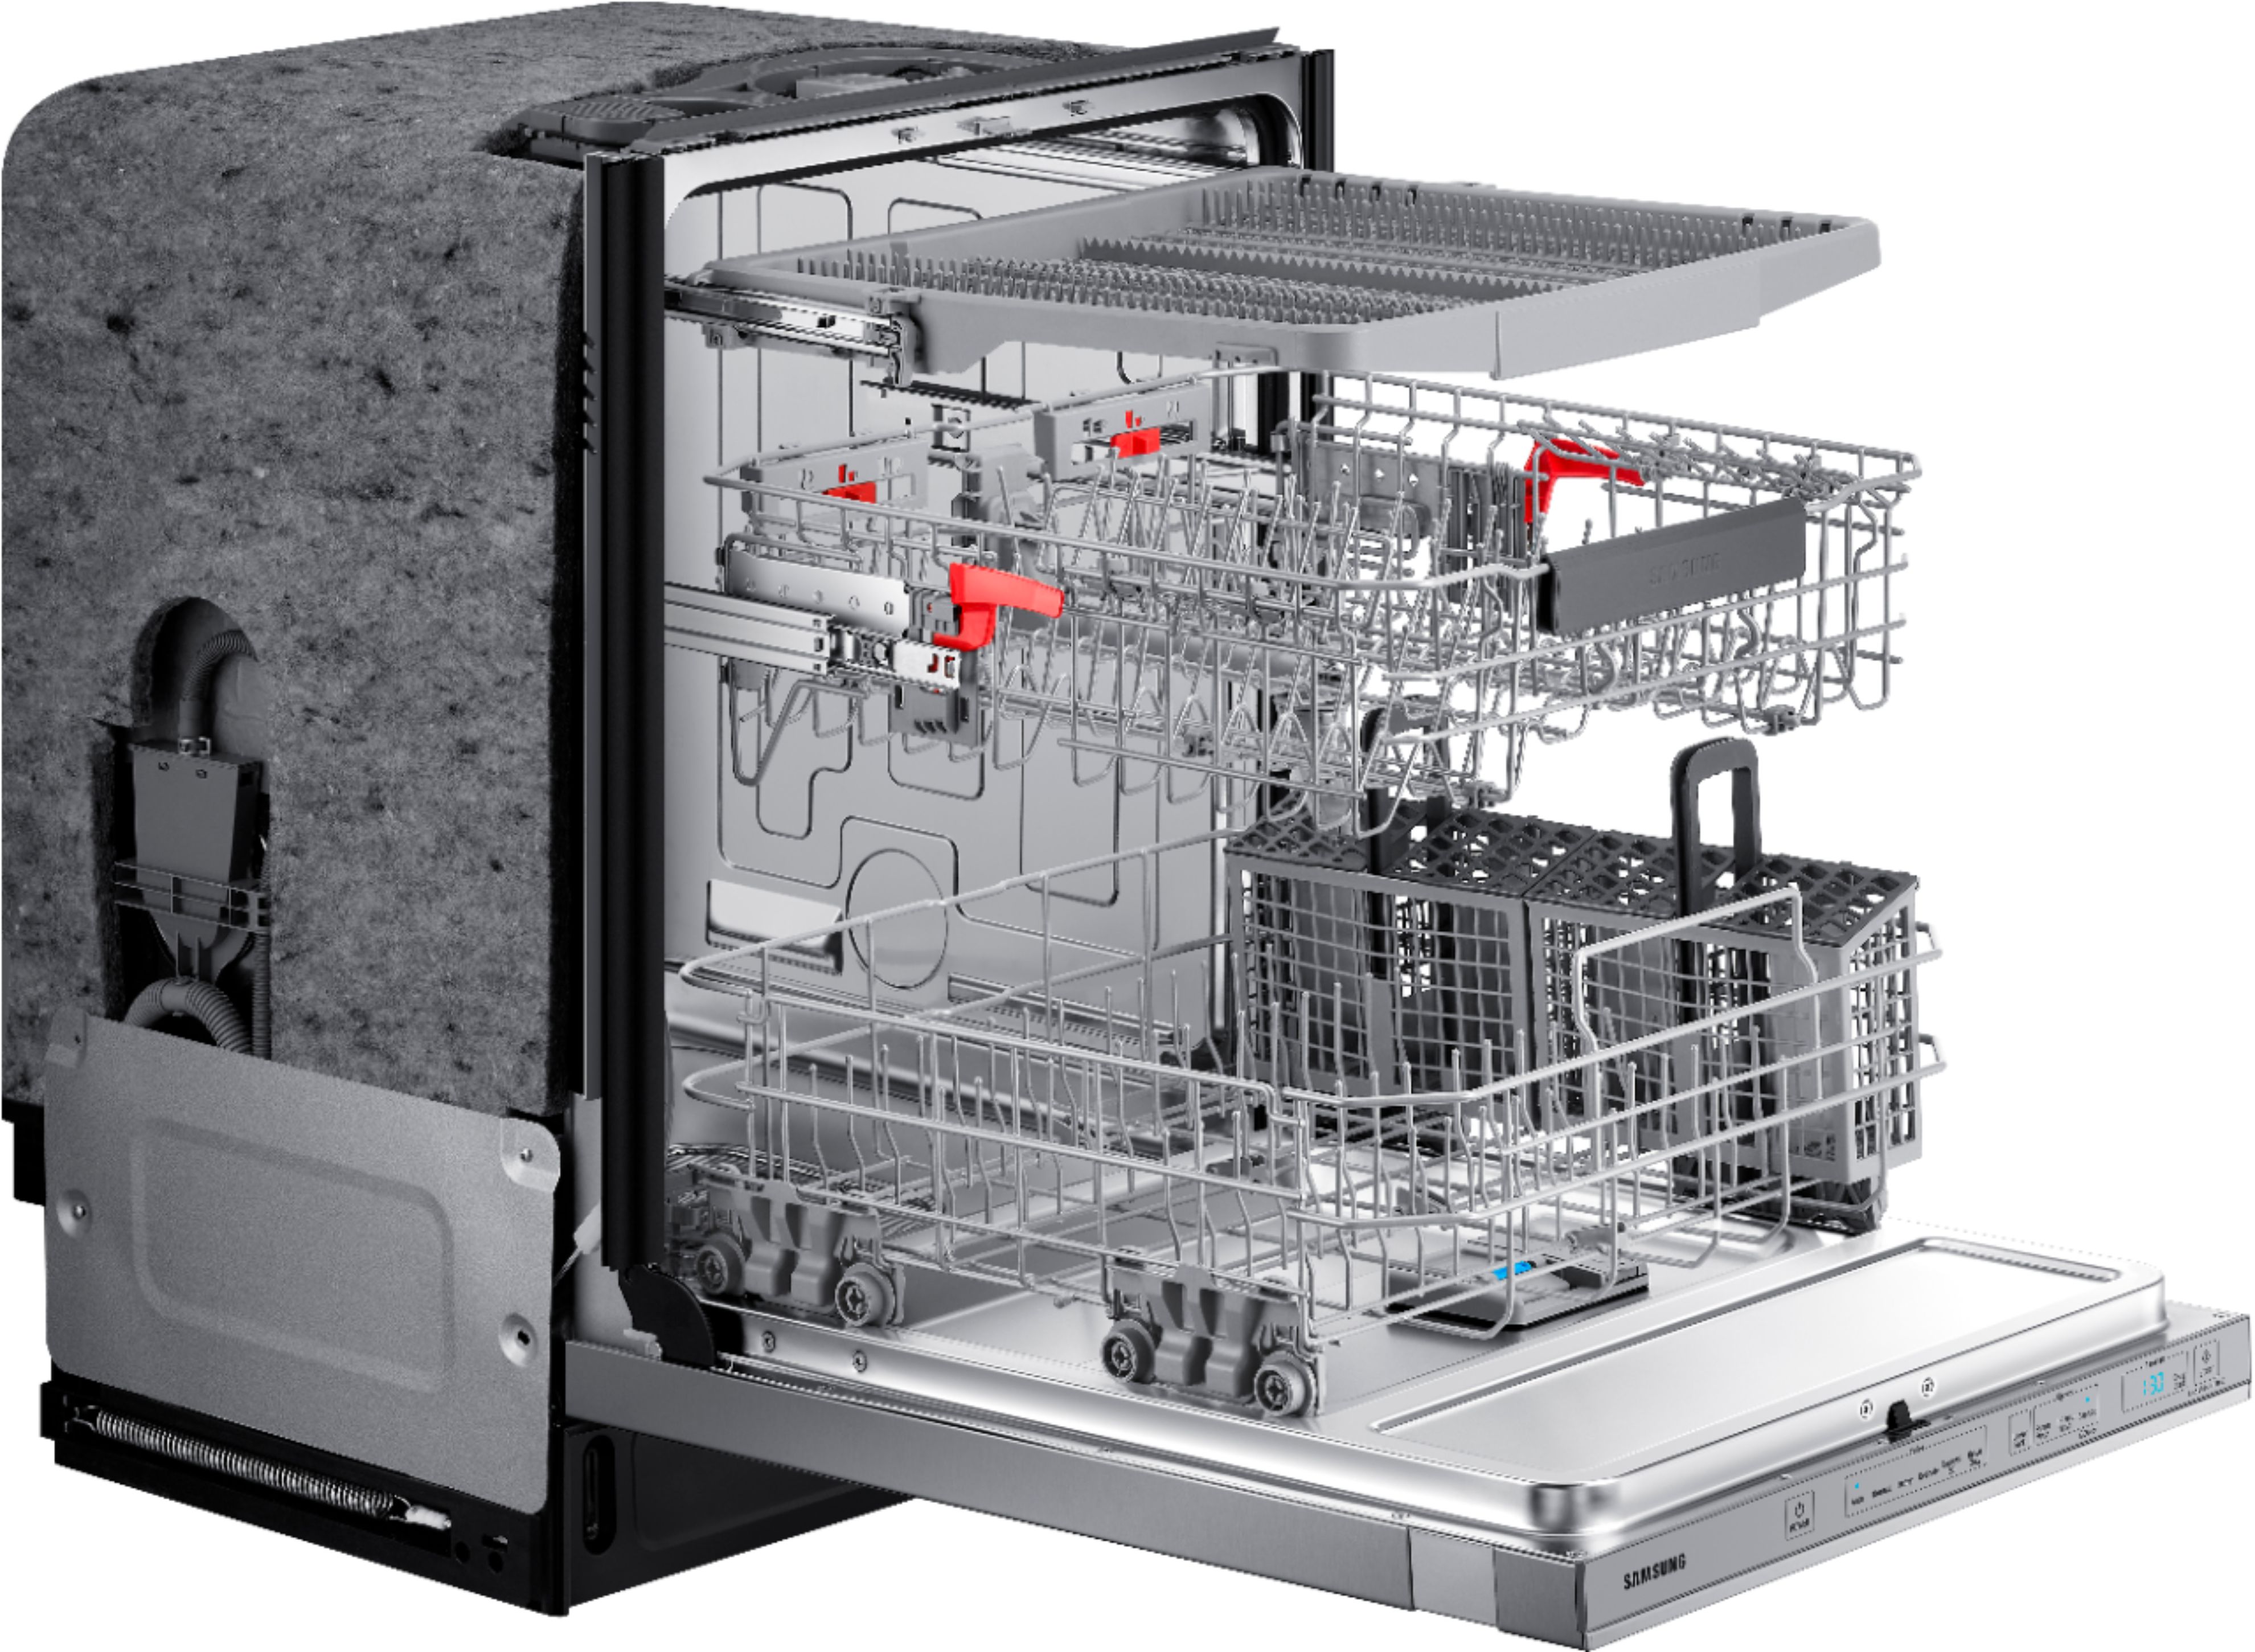 DW80R7060US by Samsung - StormWash™ 42 dBA Dishwasher in Stainless Steel